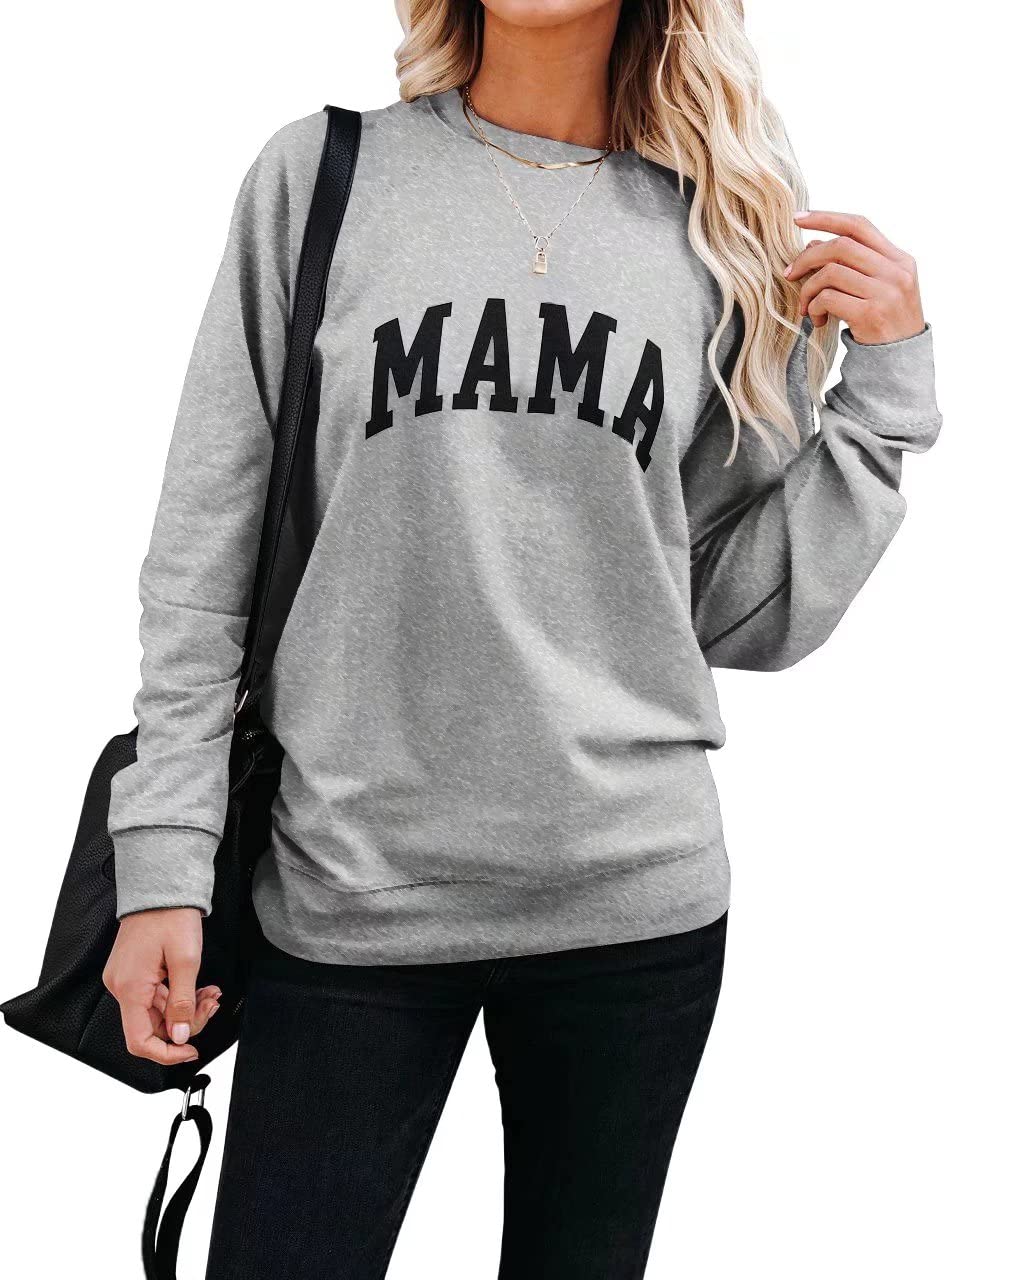 LEEDYA Women casual Sweatshirts Fall graphic Pullover Tops Fashion Long Sleeve Tee Shirts gray X-Large